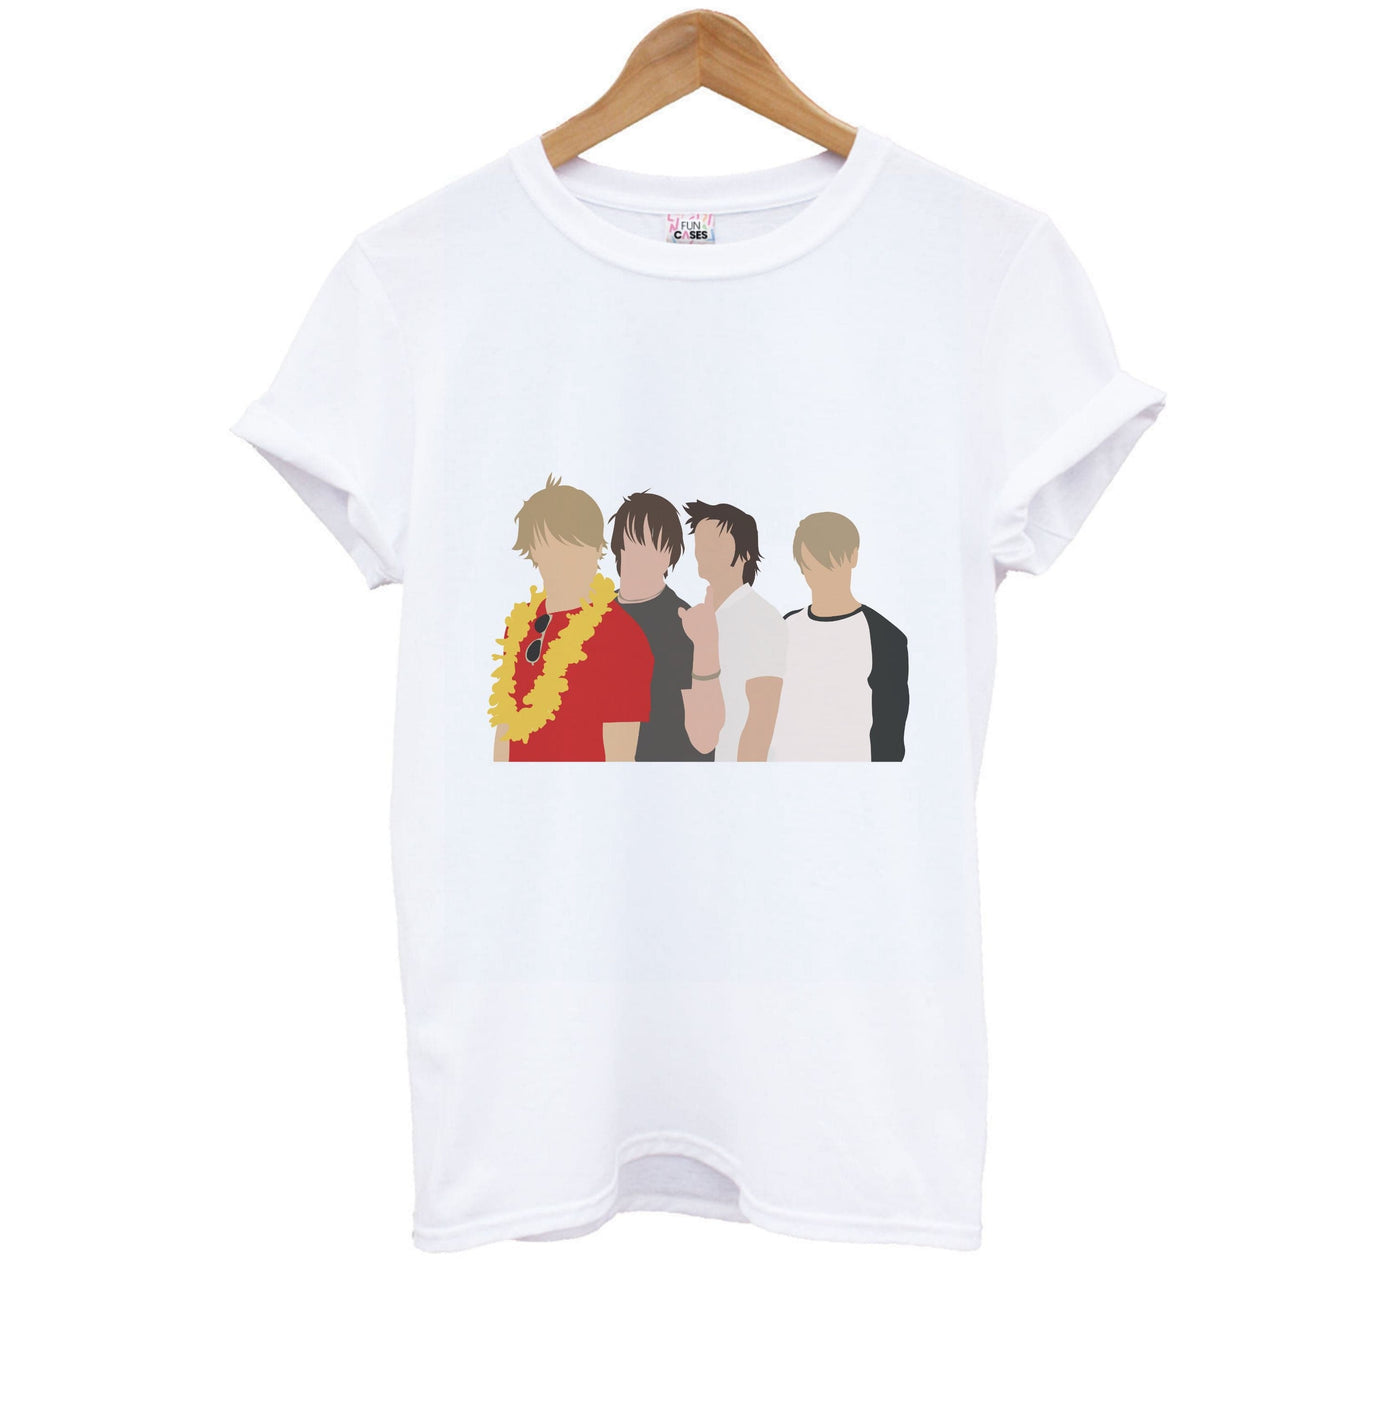 Band Members - McFly Kids T-Shirt